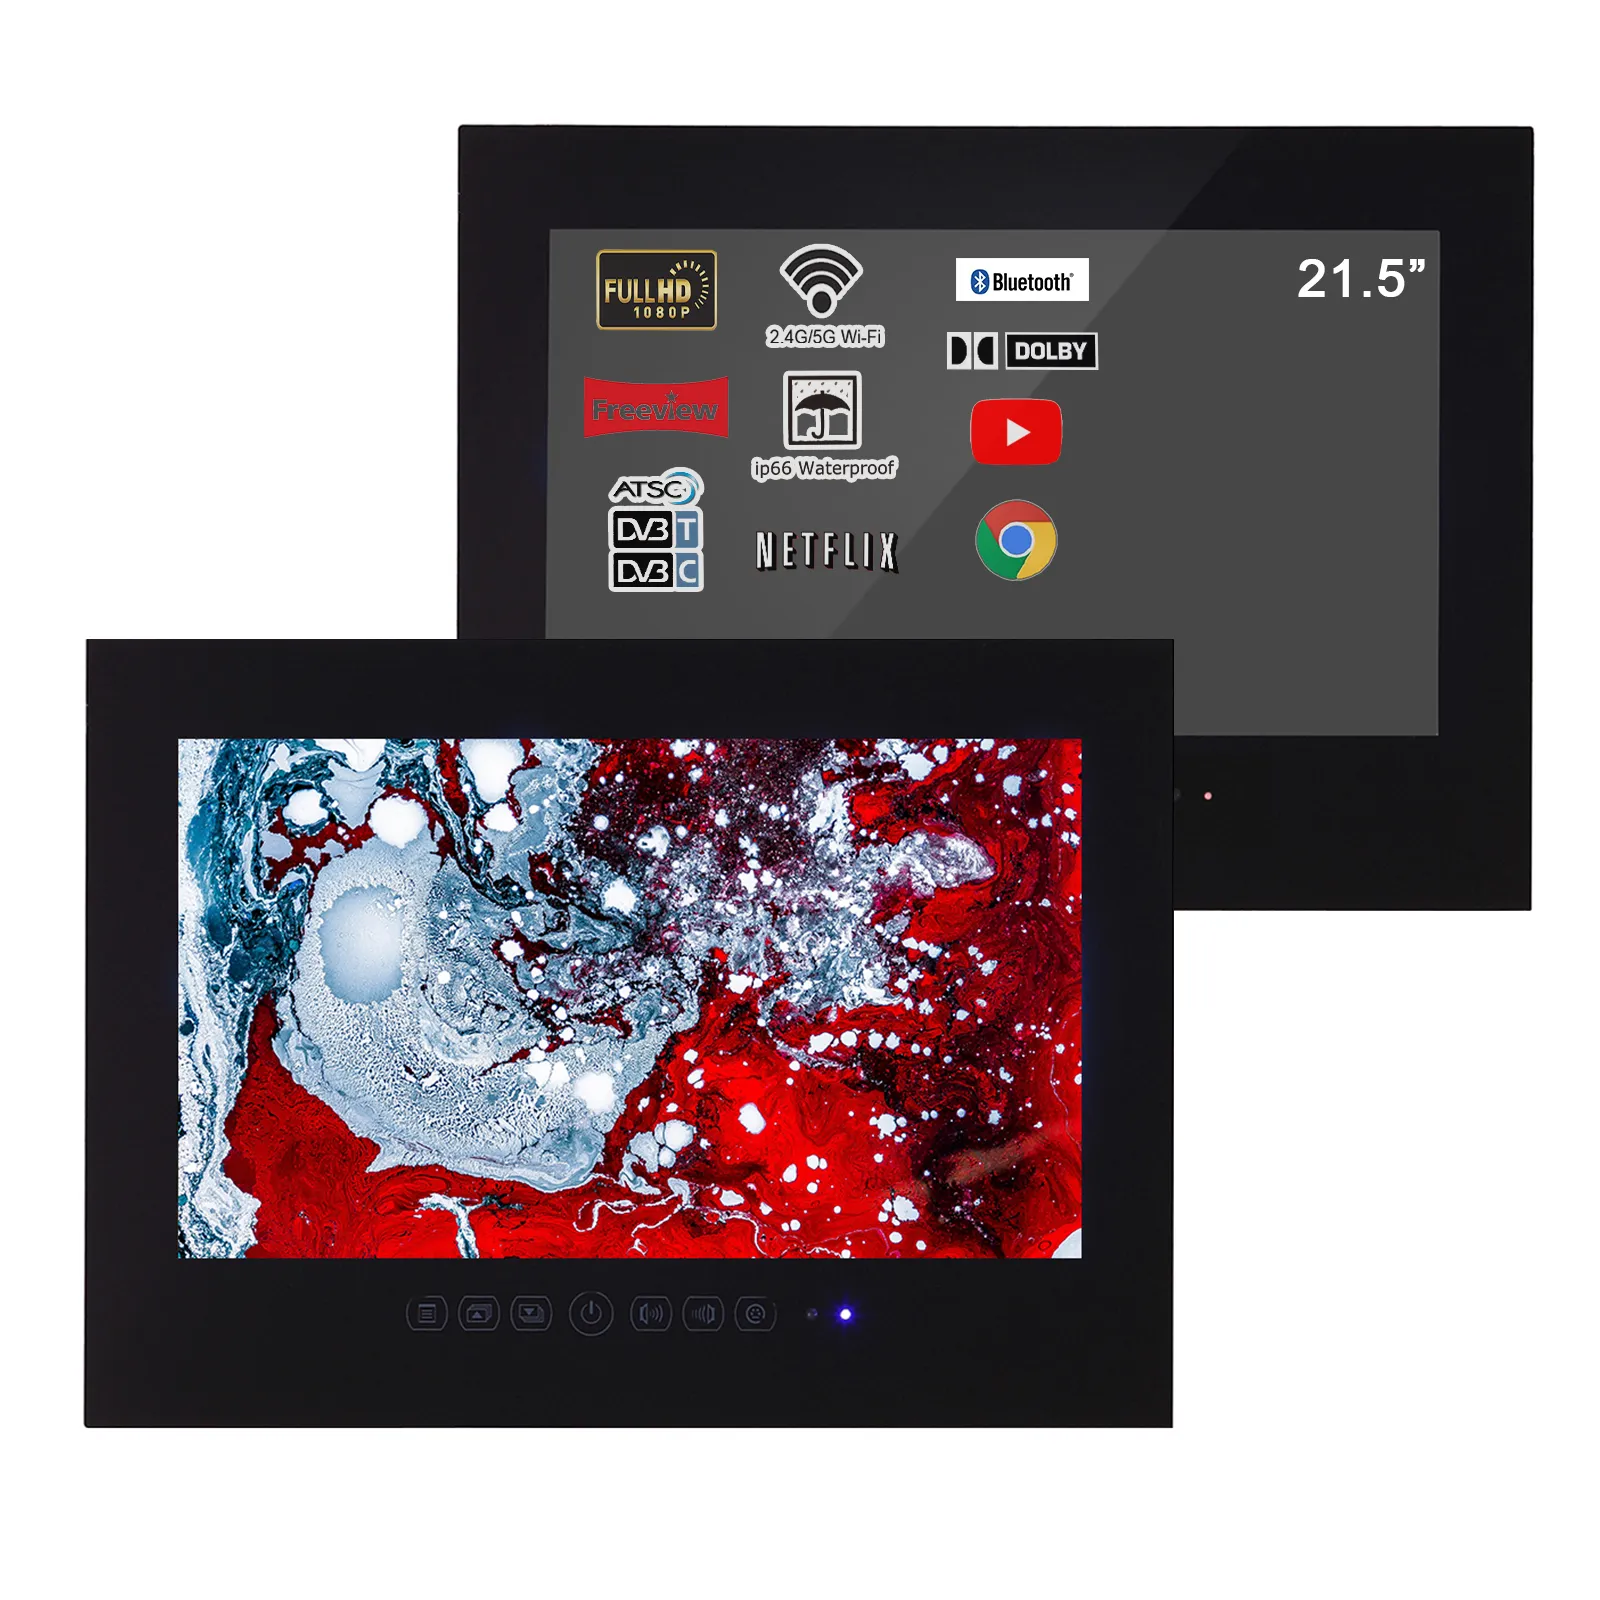 Soulca 21.5 cal czarna łazienka LED Telewizja Smart Android Hotel Wodoodporny panel Szkło TV Bezramowe Full HD 1080